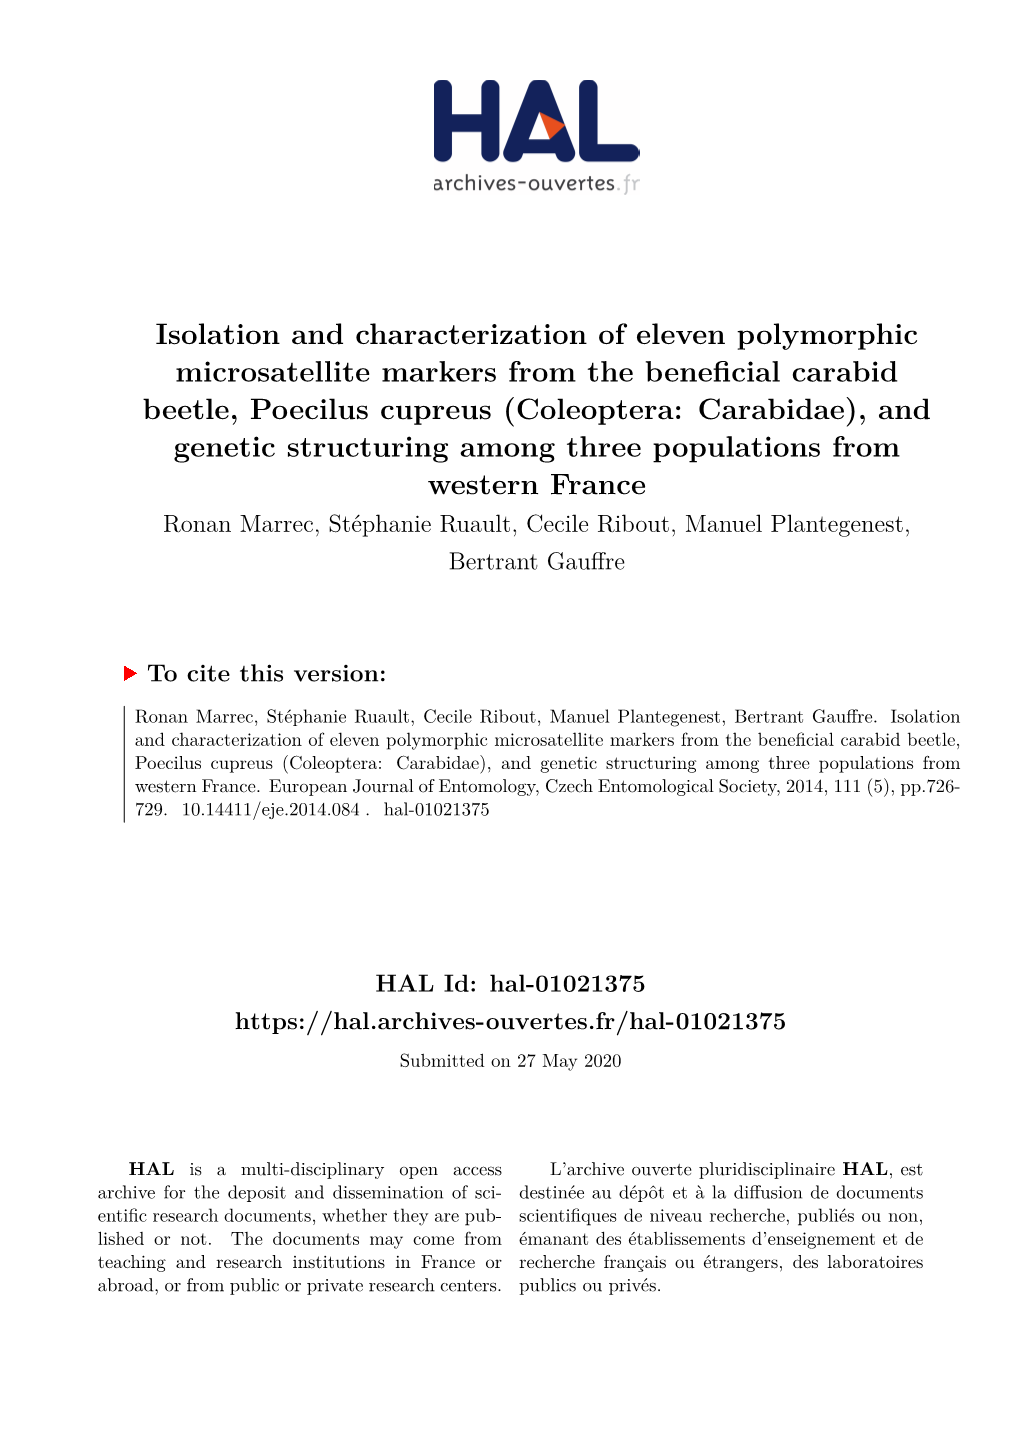 Isolation and Characterization of Eleven Polymorphic Microsatellite